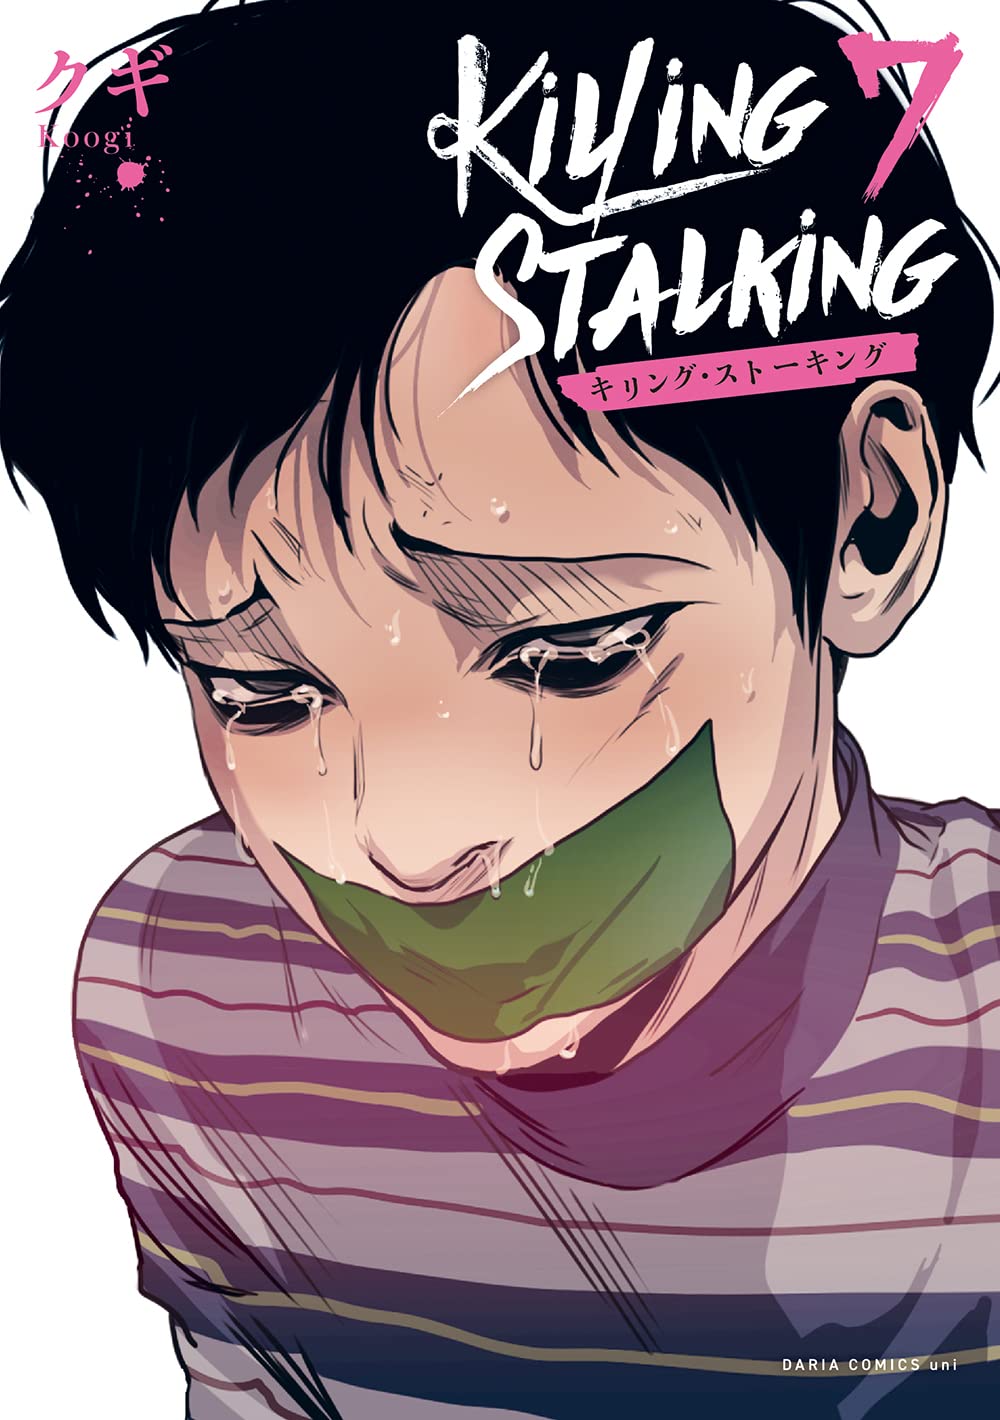 Killing stalking (Vol. 1)